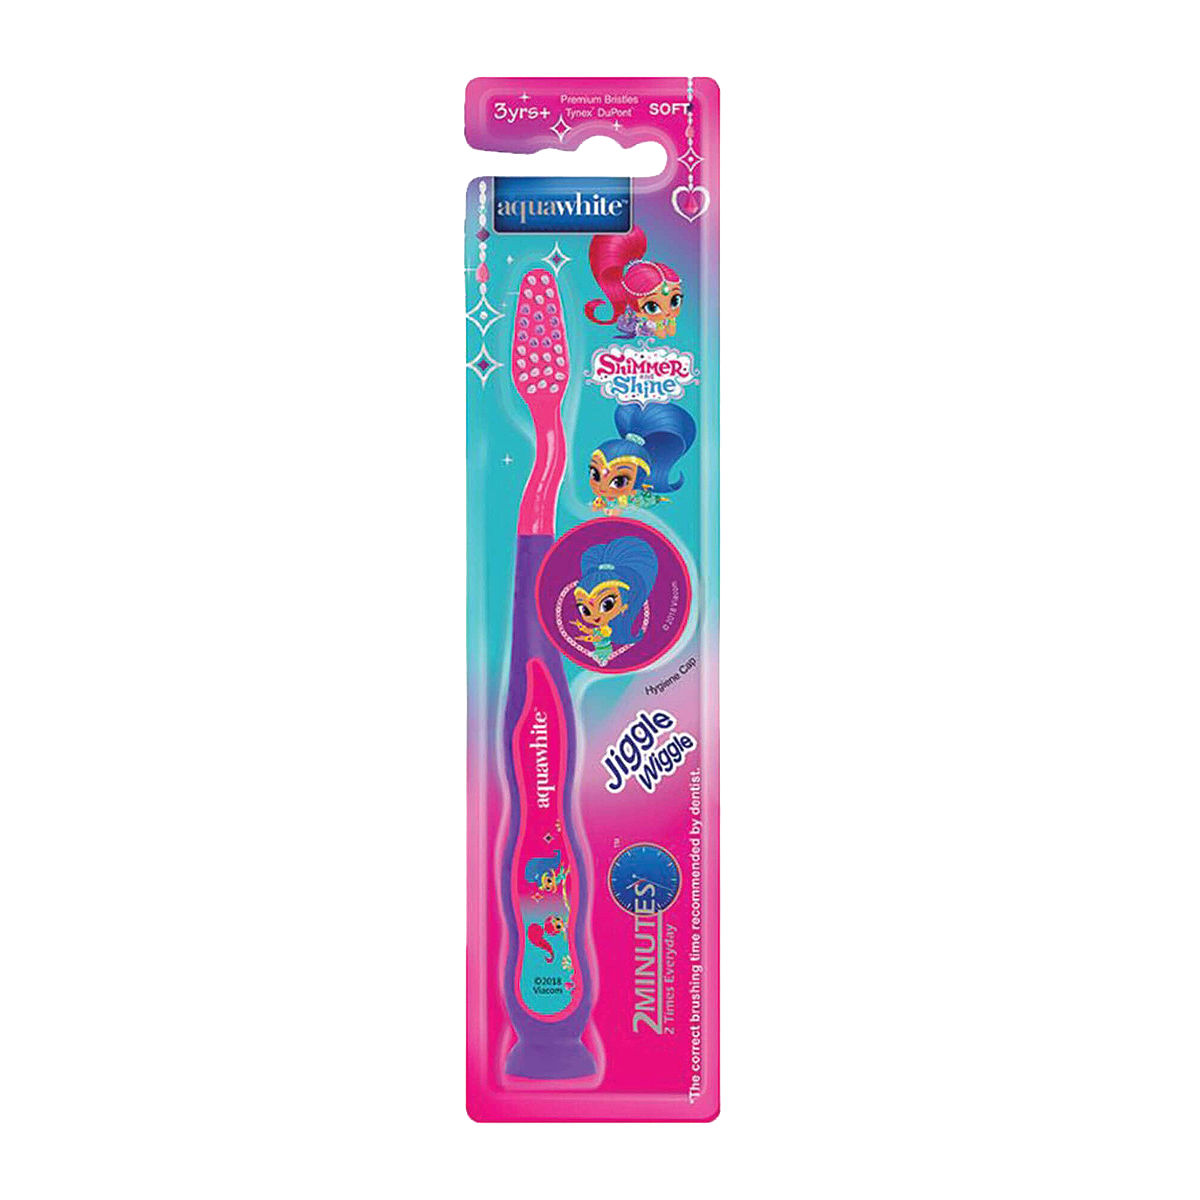 Buy Aquawhite Shimmer & Shine Jiggle Wiggle Toothbrush, 1 Count Online